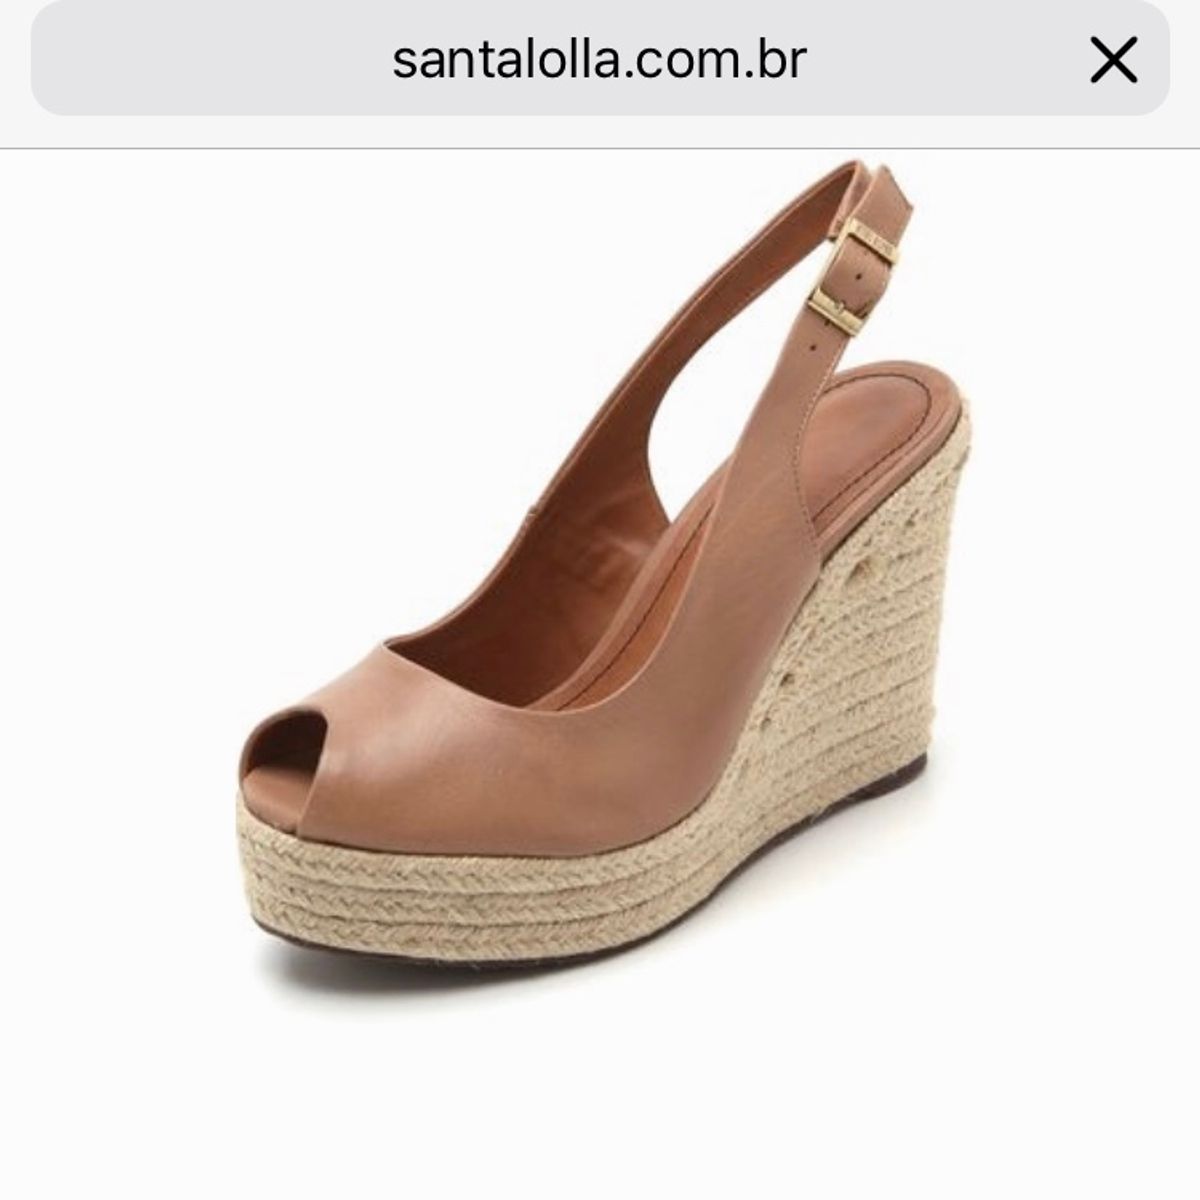 sandálias santa lolla 2019